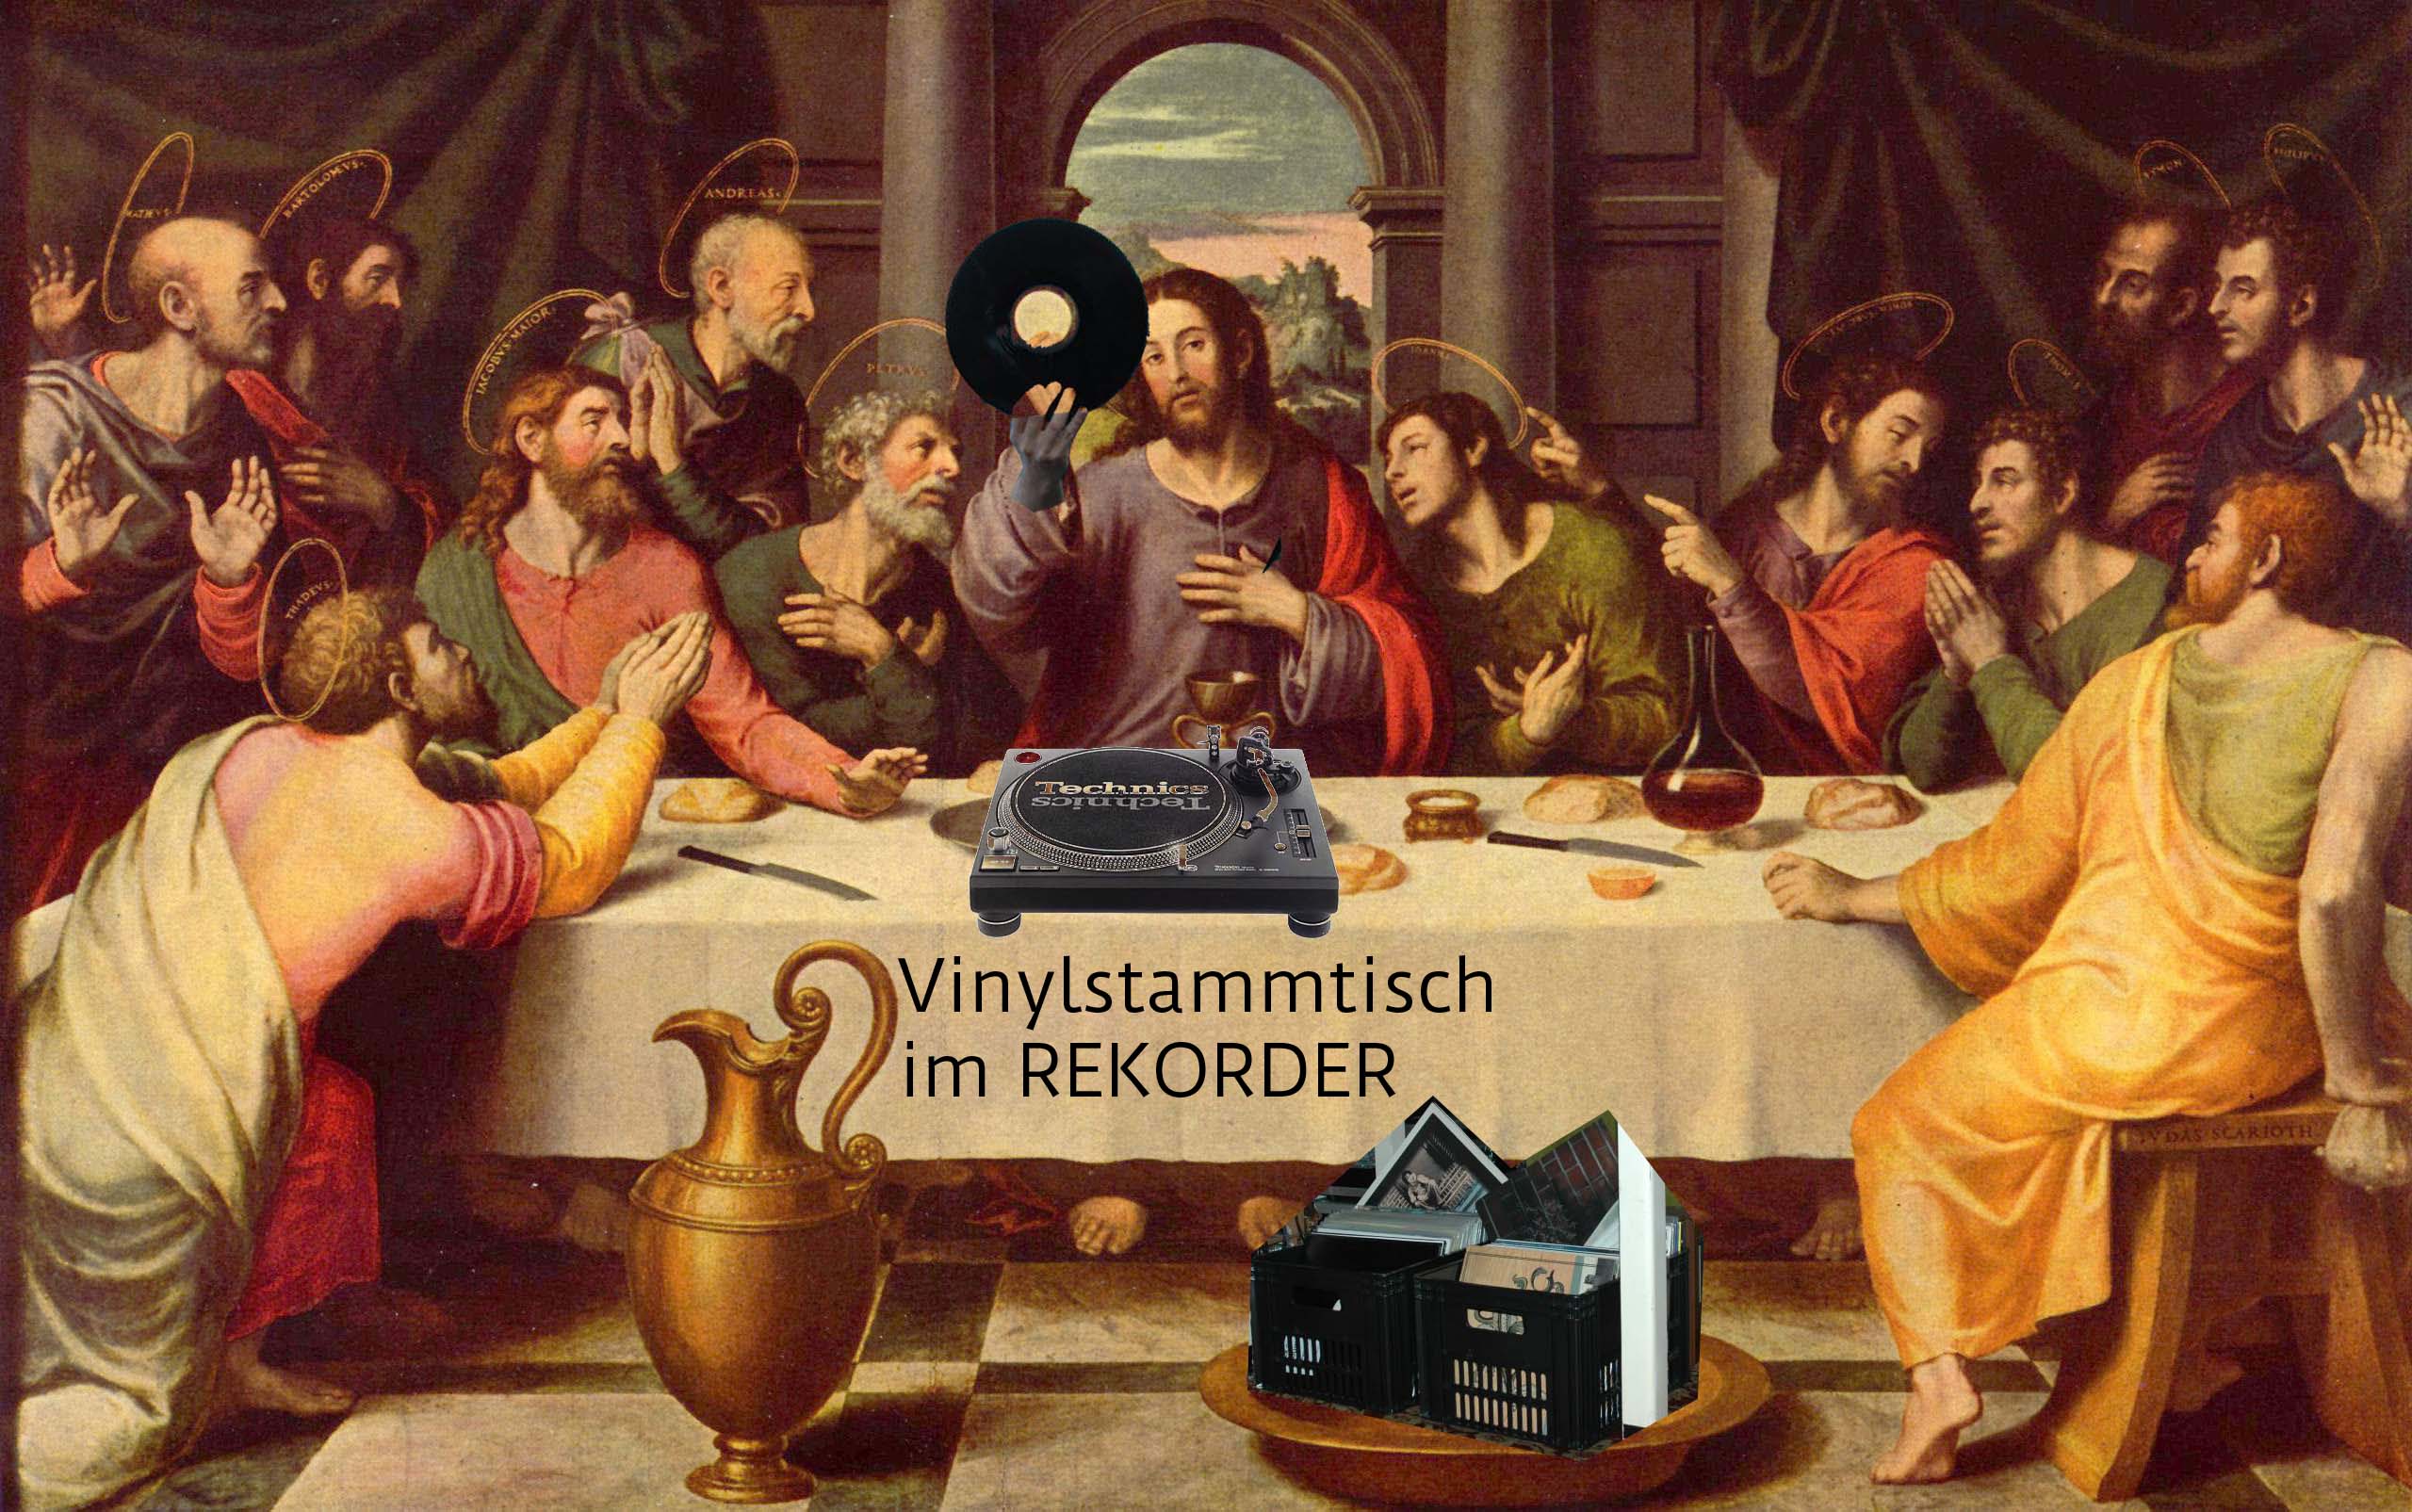 Vinylstammtisch feat. Huml